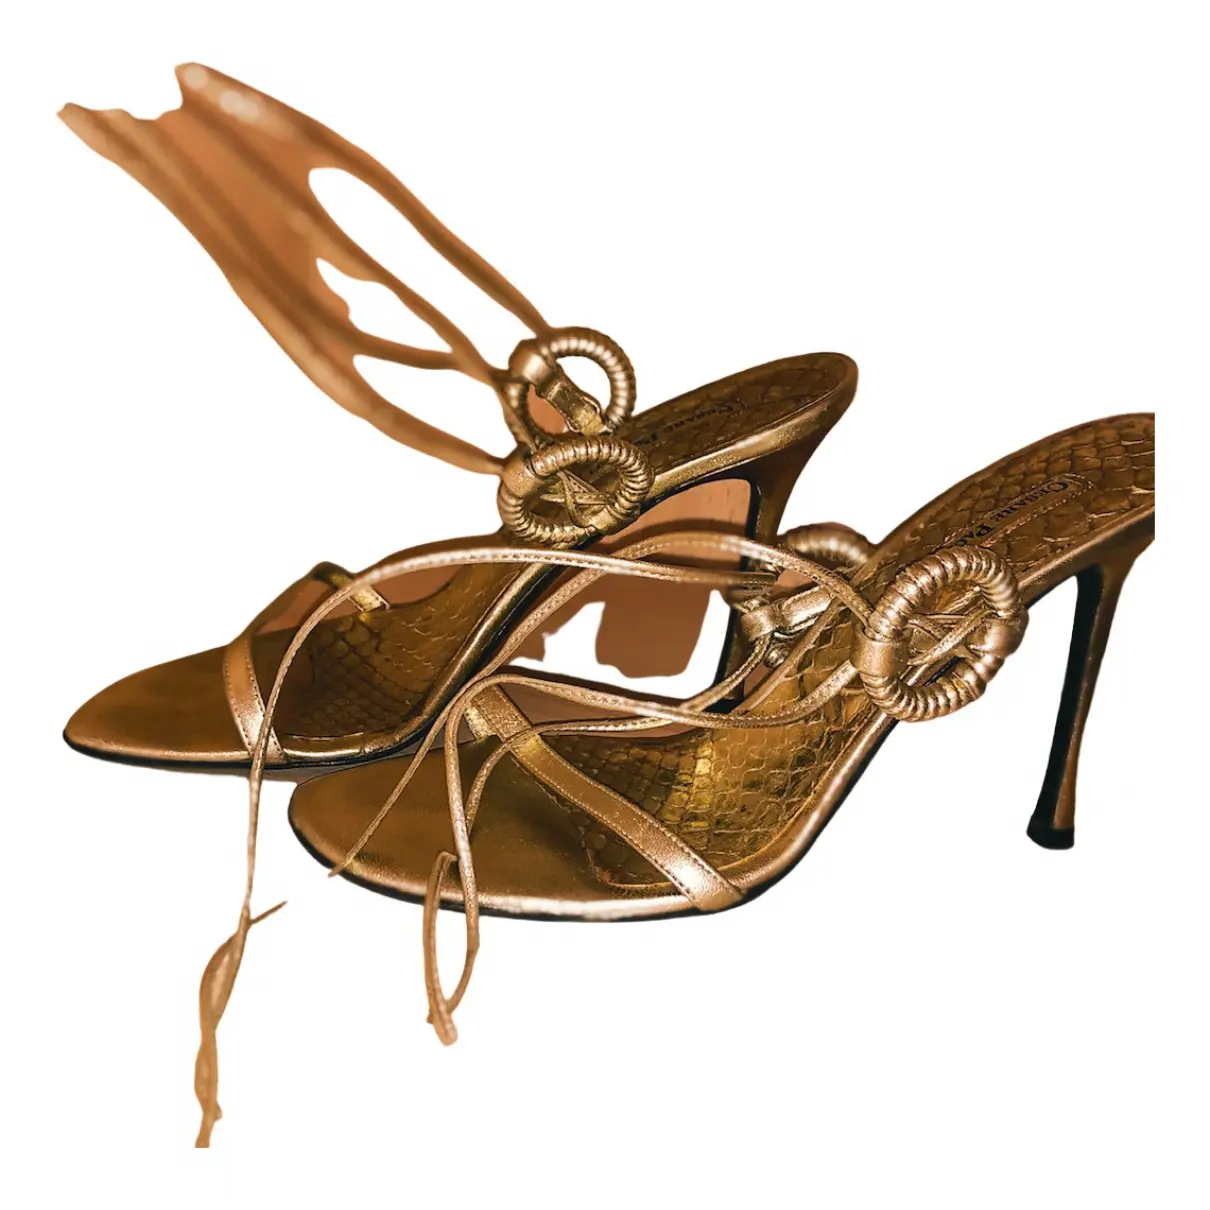 Leather sandals Cesare Paciotti - Vintage